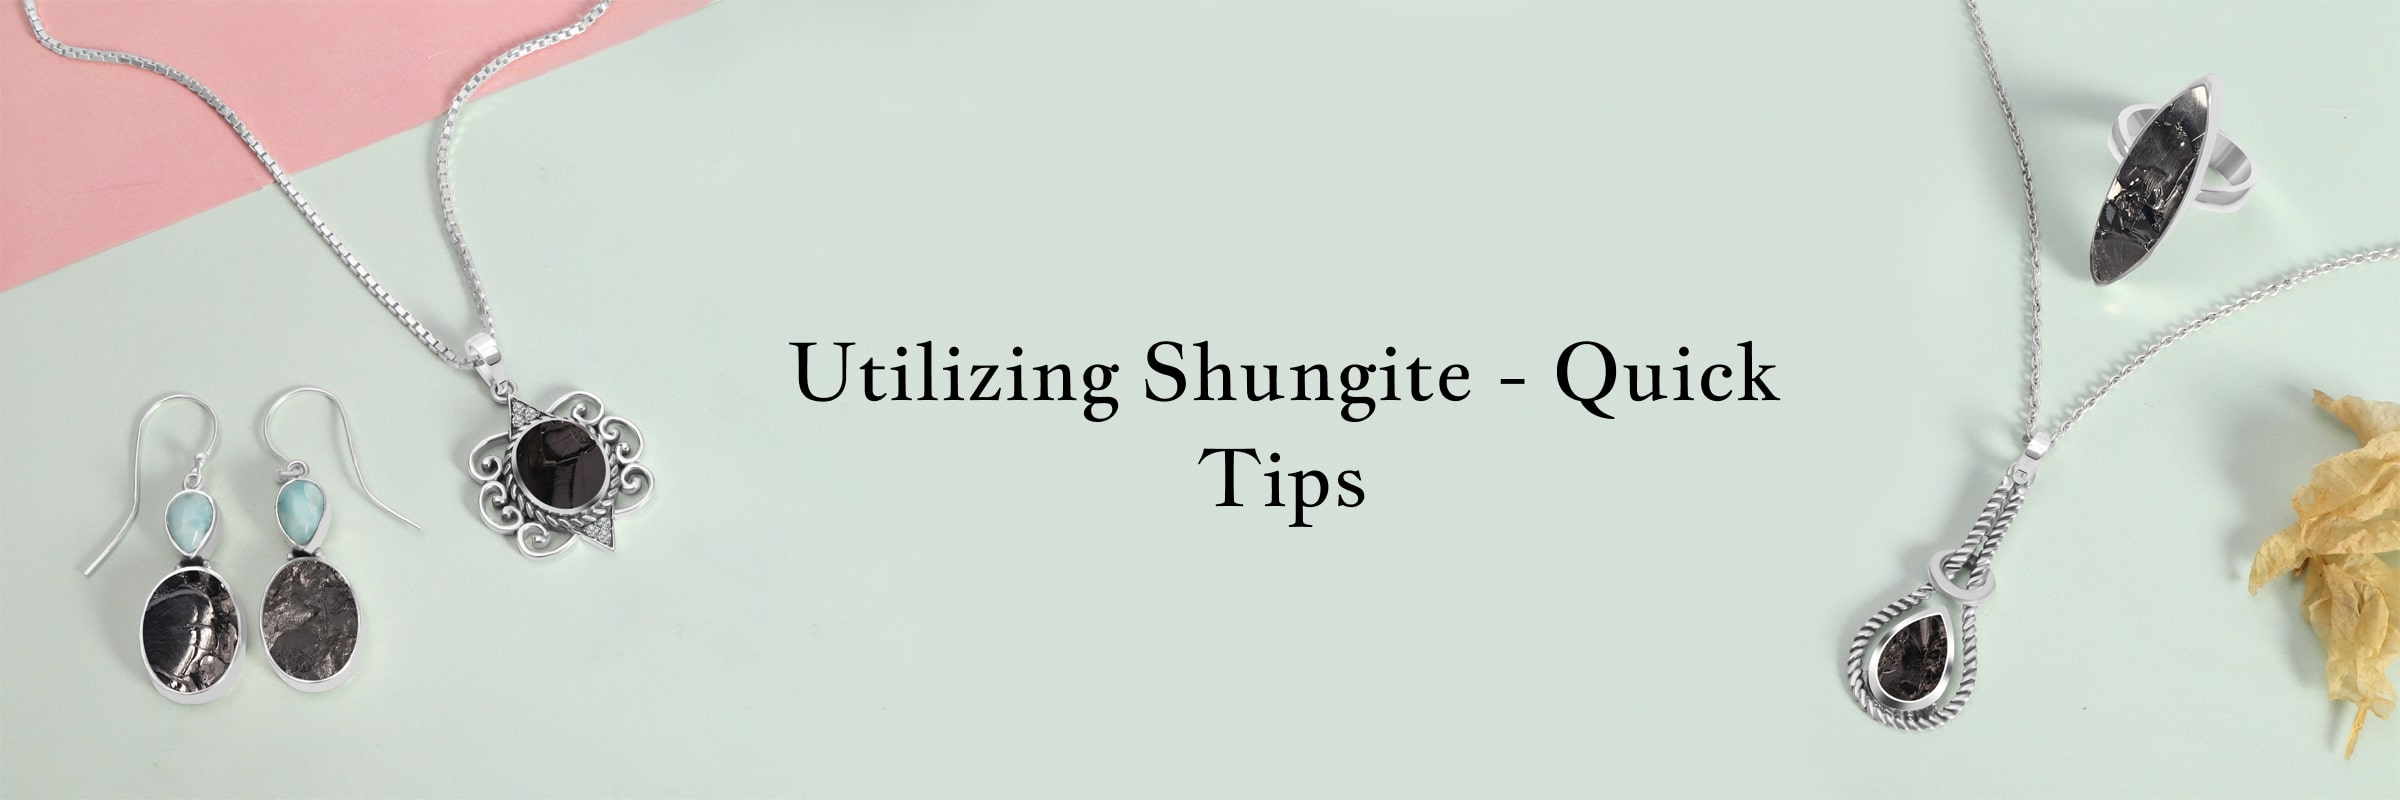 How to use shungite